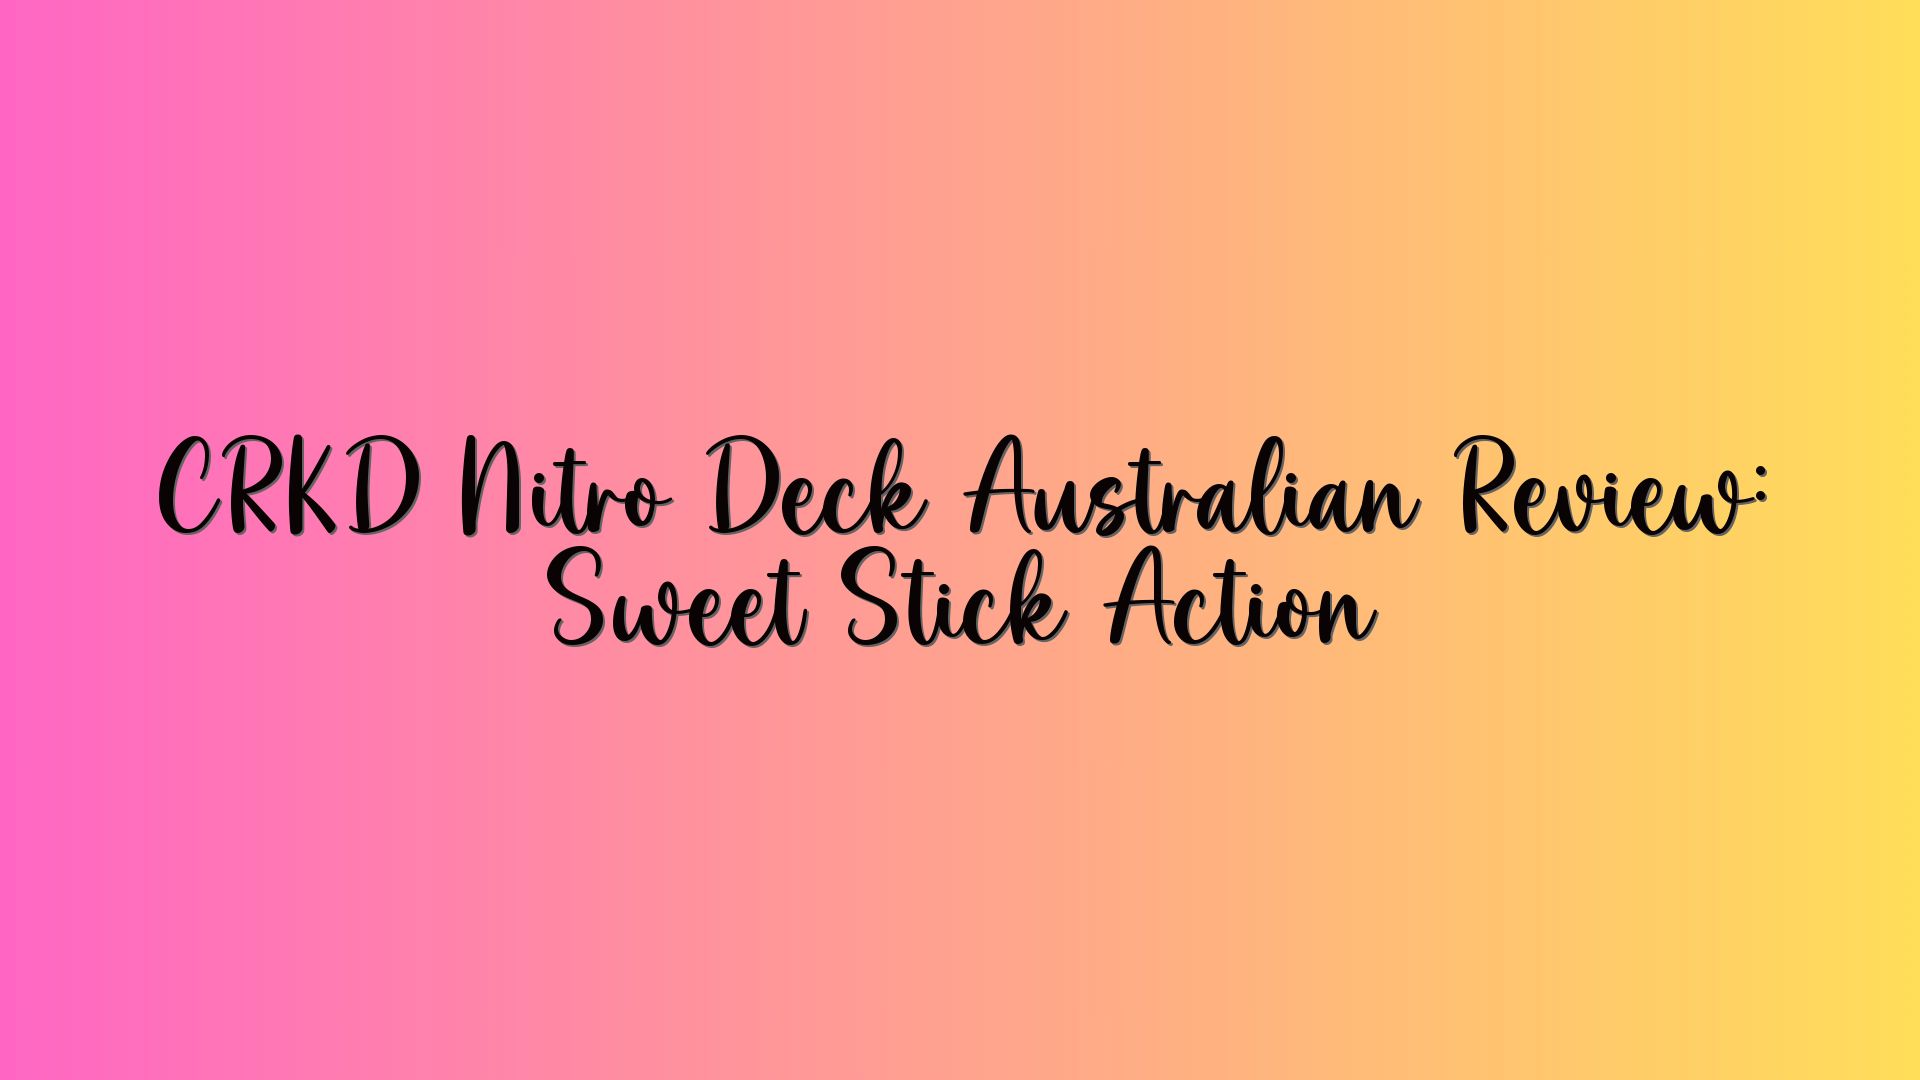 CRKD Nitro Deck Australian Review: Sweet Stick Action